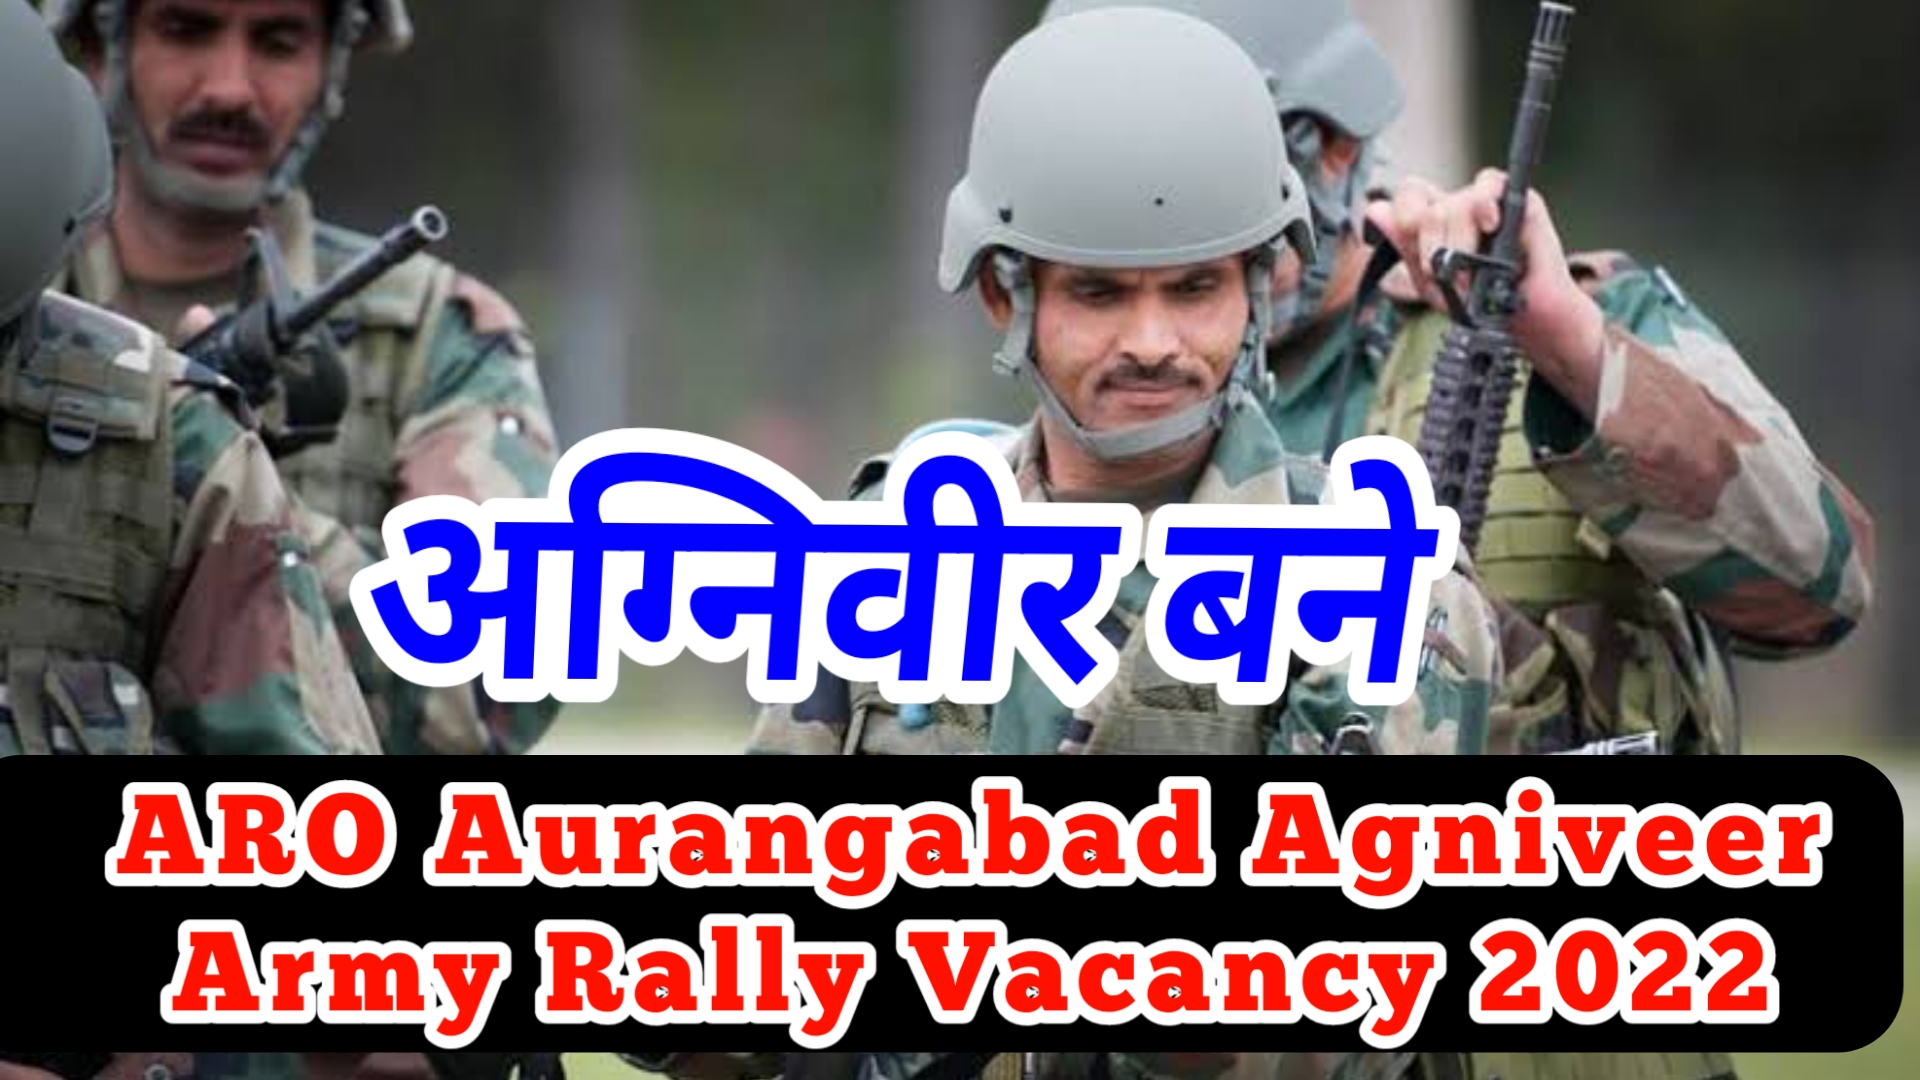 ARO Aurangabad Agniveer Army Rally Vacancy 2022